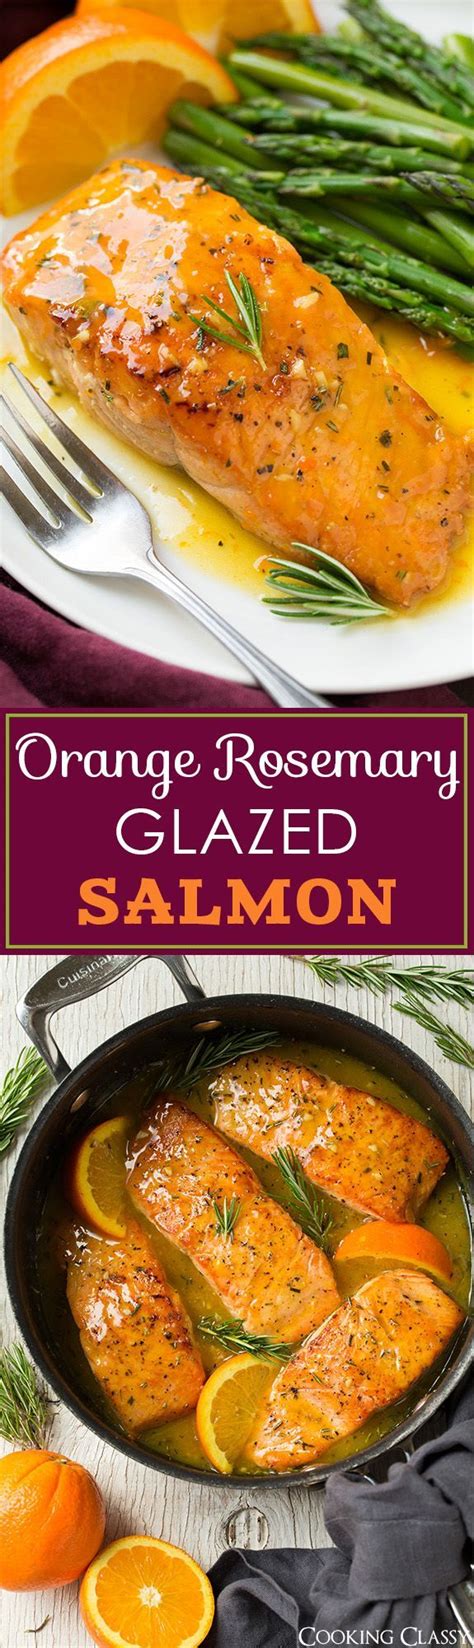 Orange Rosemary Glazed Salmon This Was So Easy To Make